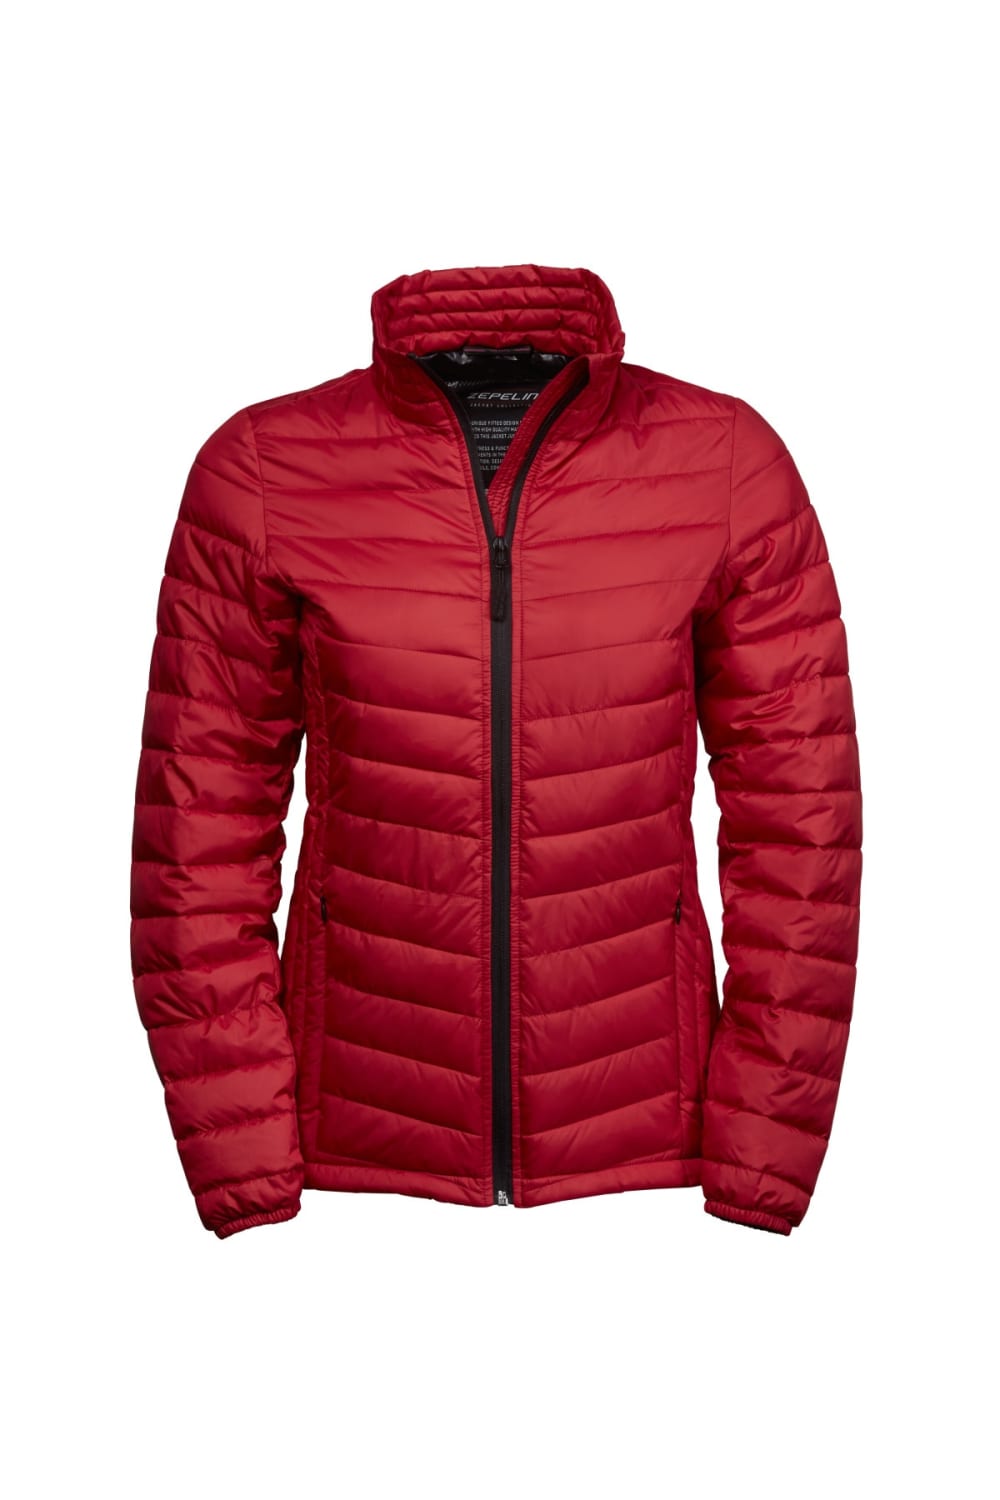 Tee Jays Womens/Ladies Padded Zepelin Jacket (Deep Red)